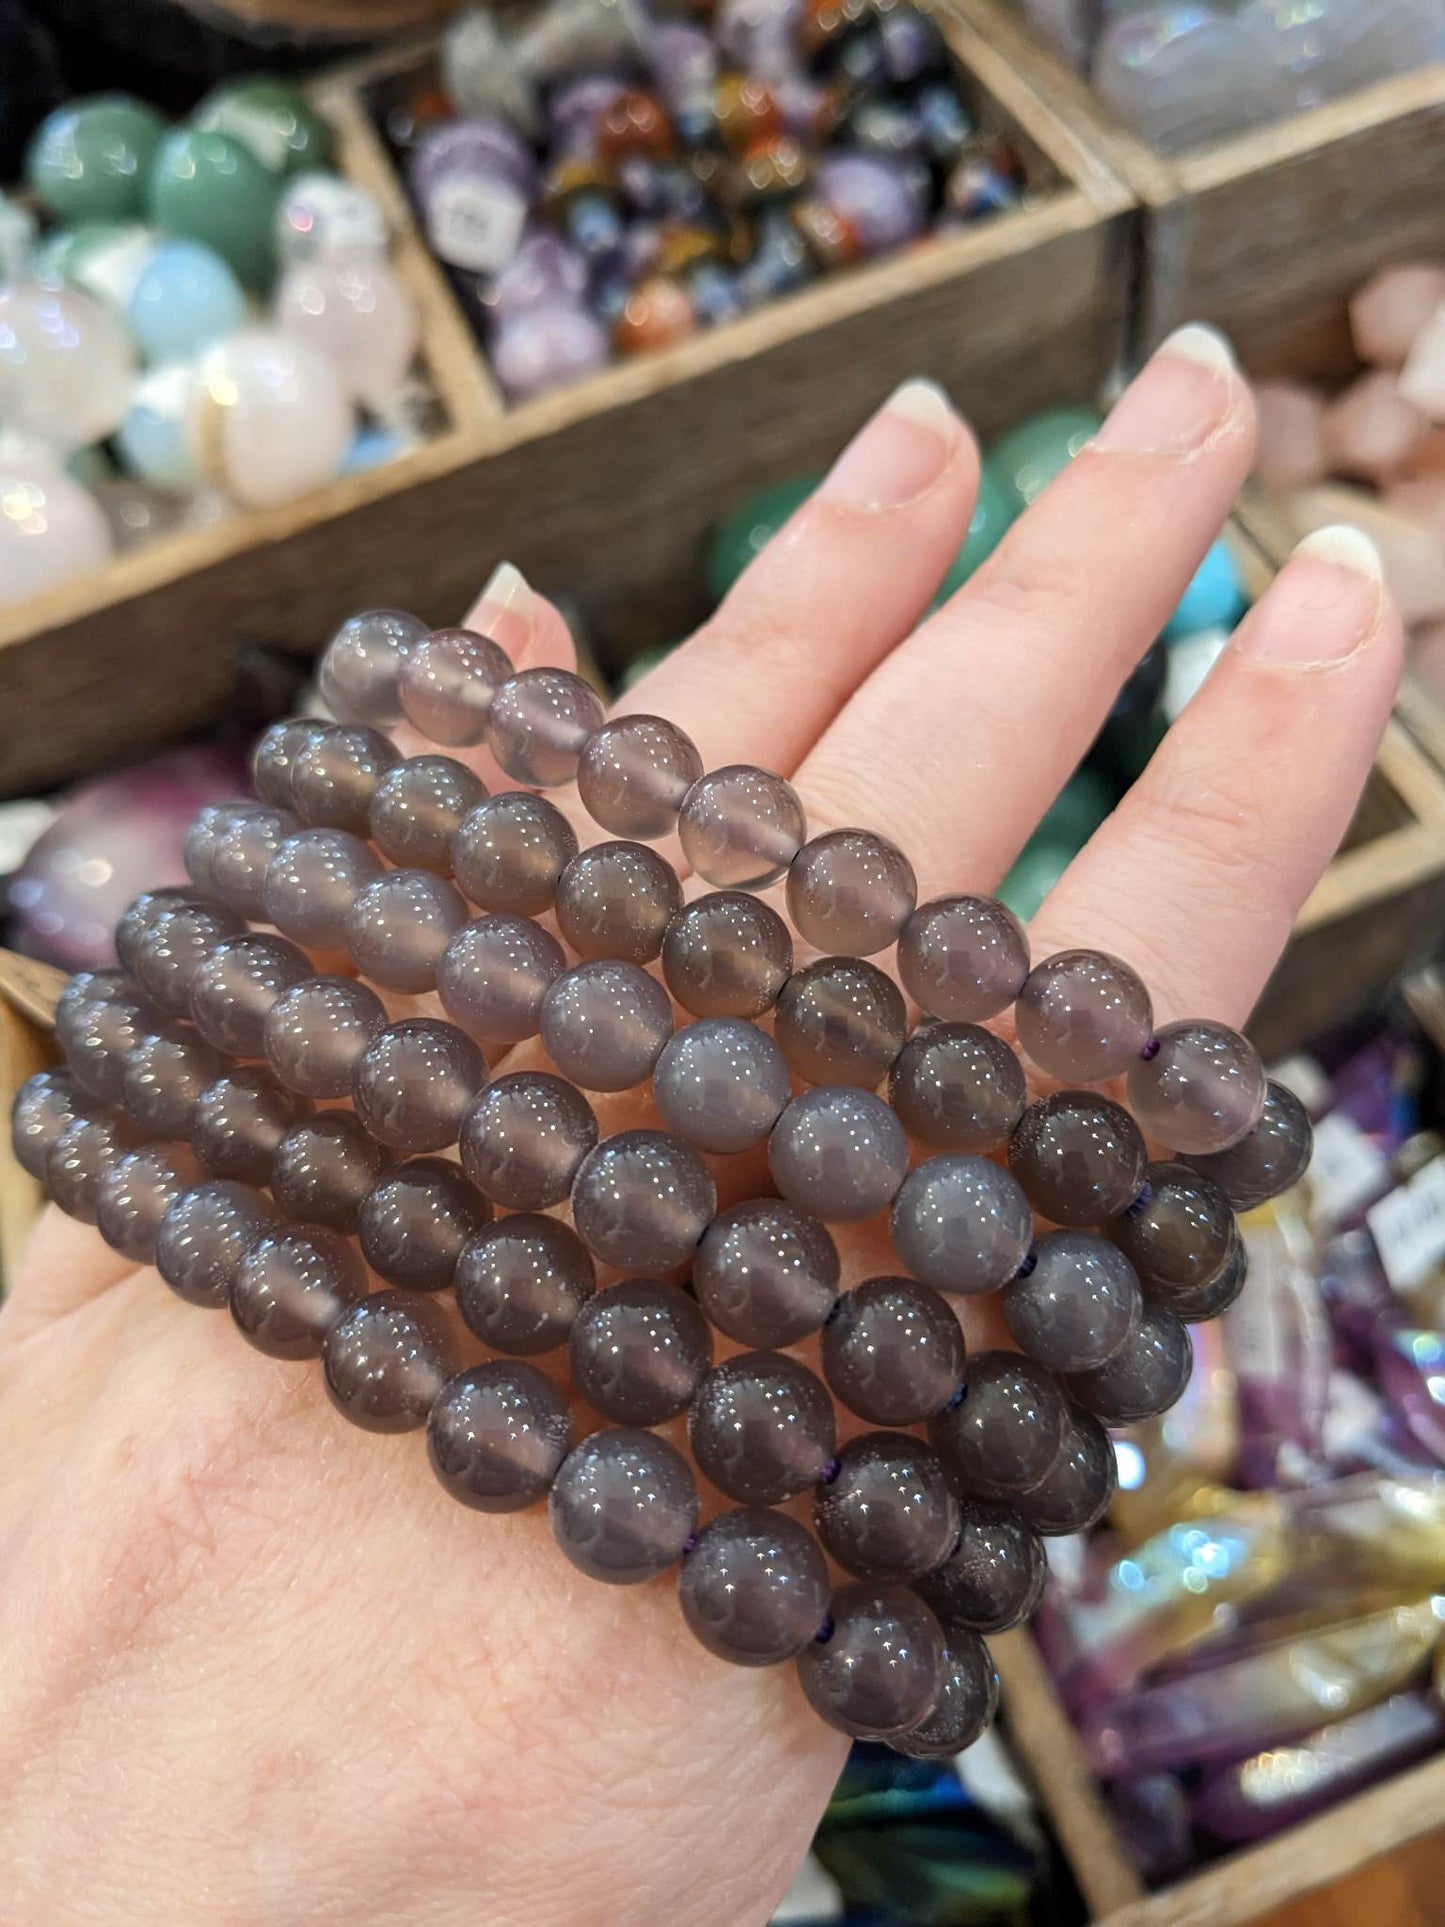 Purple Jade Bracelet